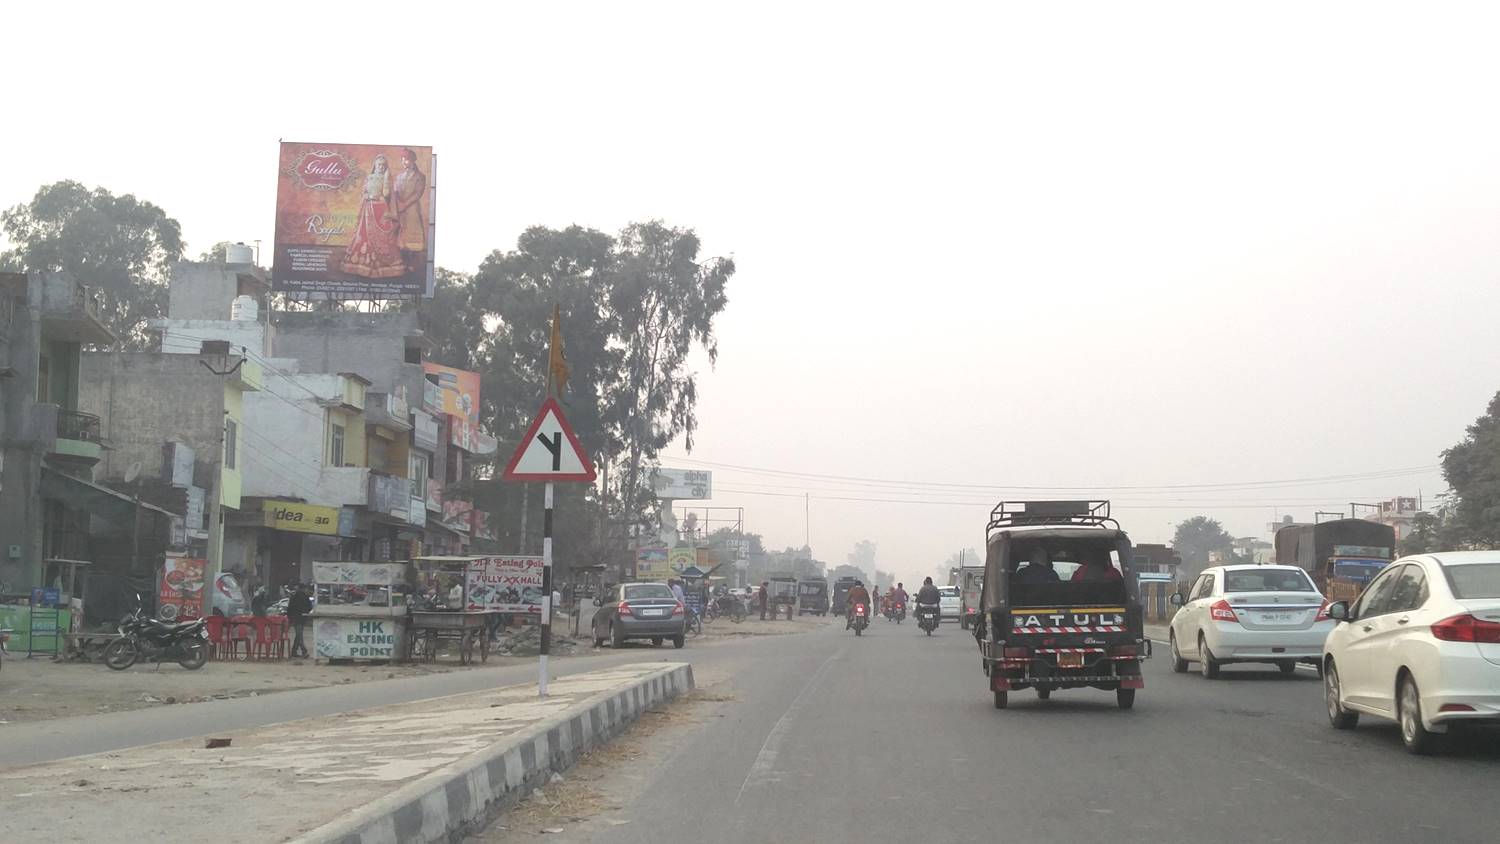 Daburji Asr Gate Outside Alpha City, Amritsar